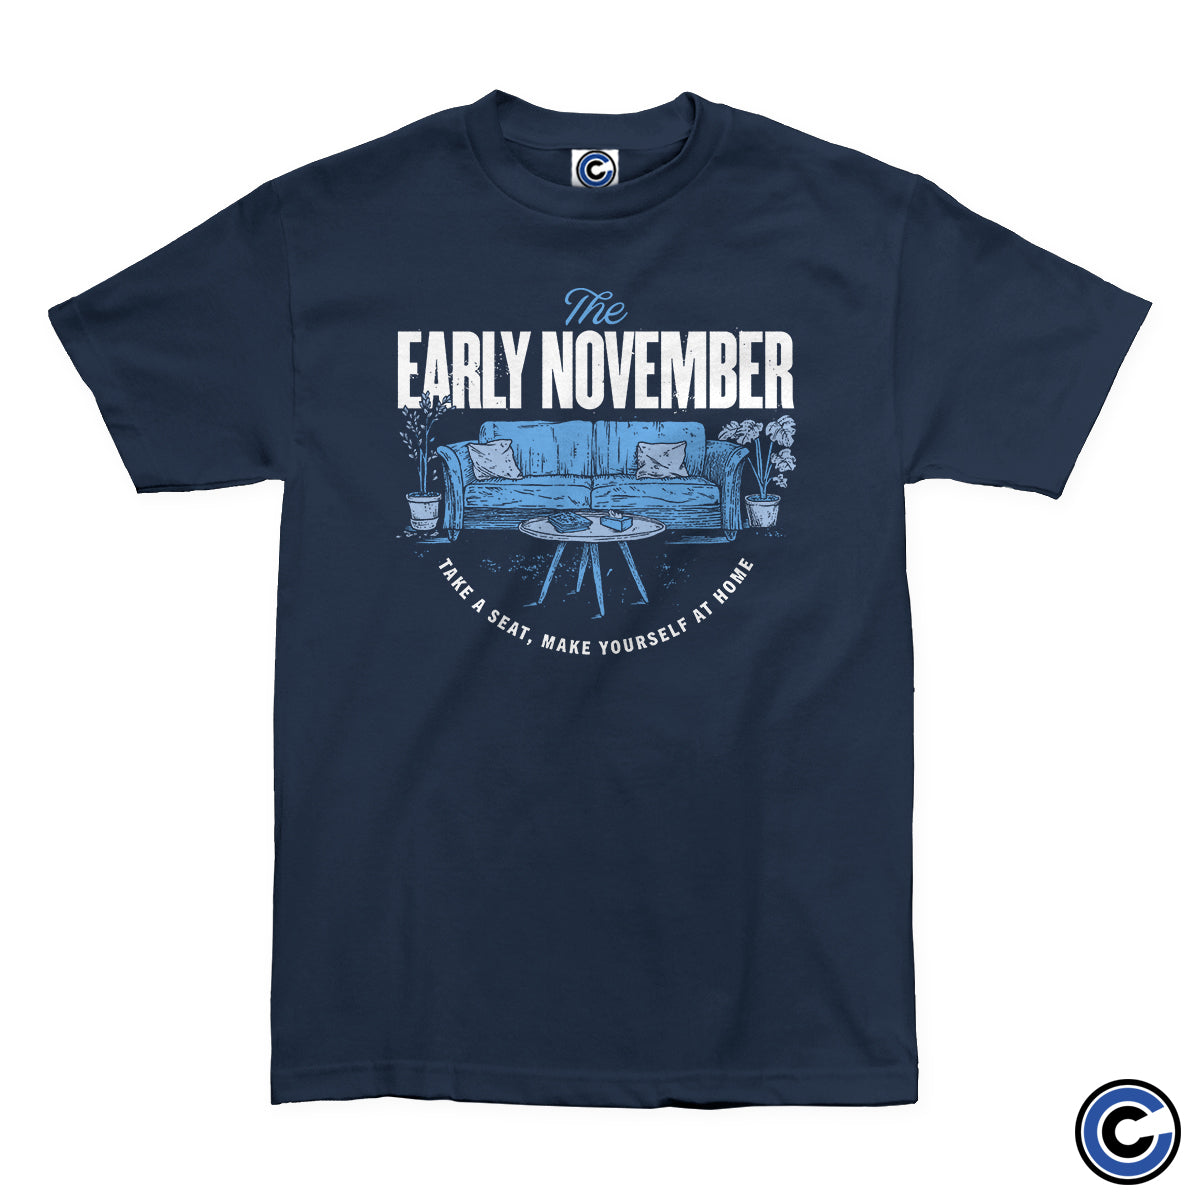 The Early November "Waiting Room" Shirt